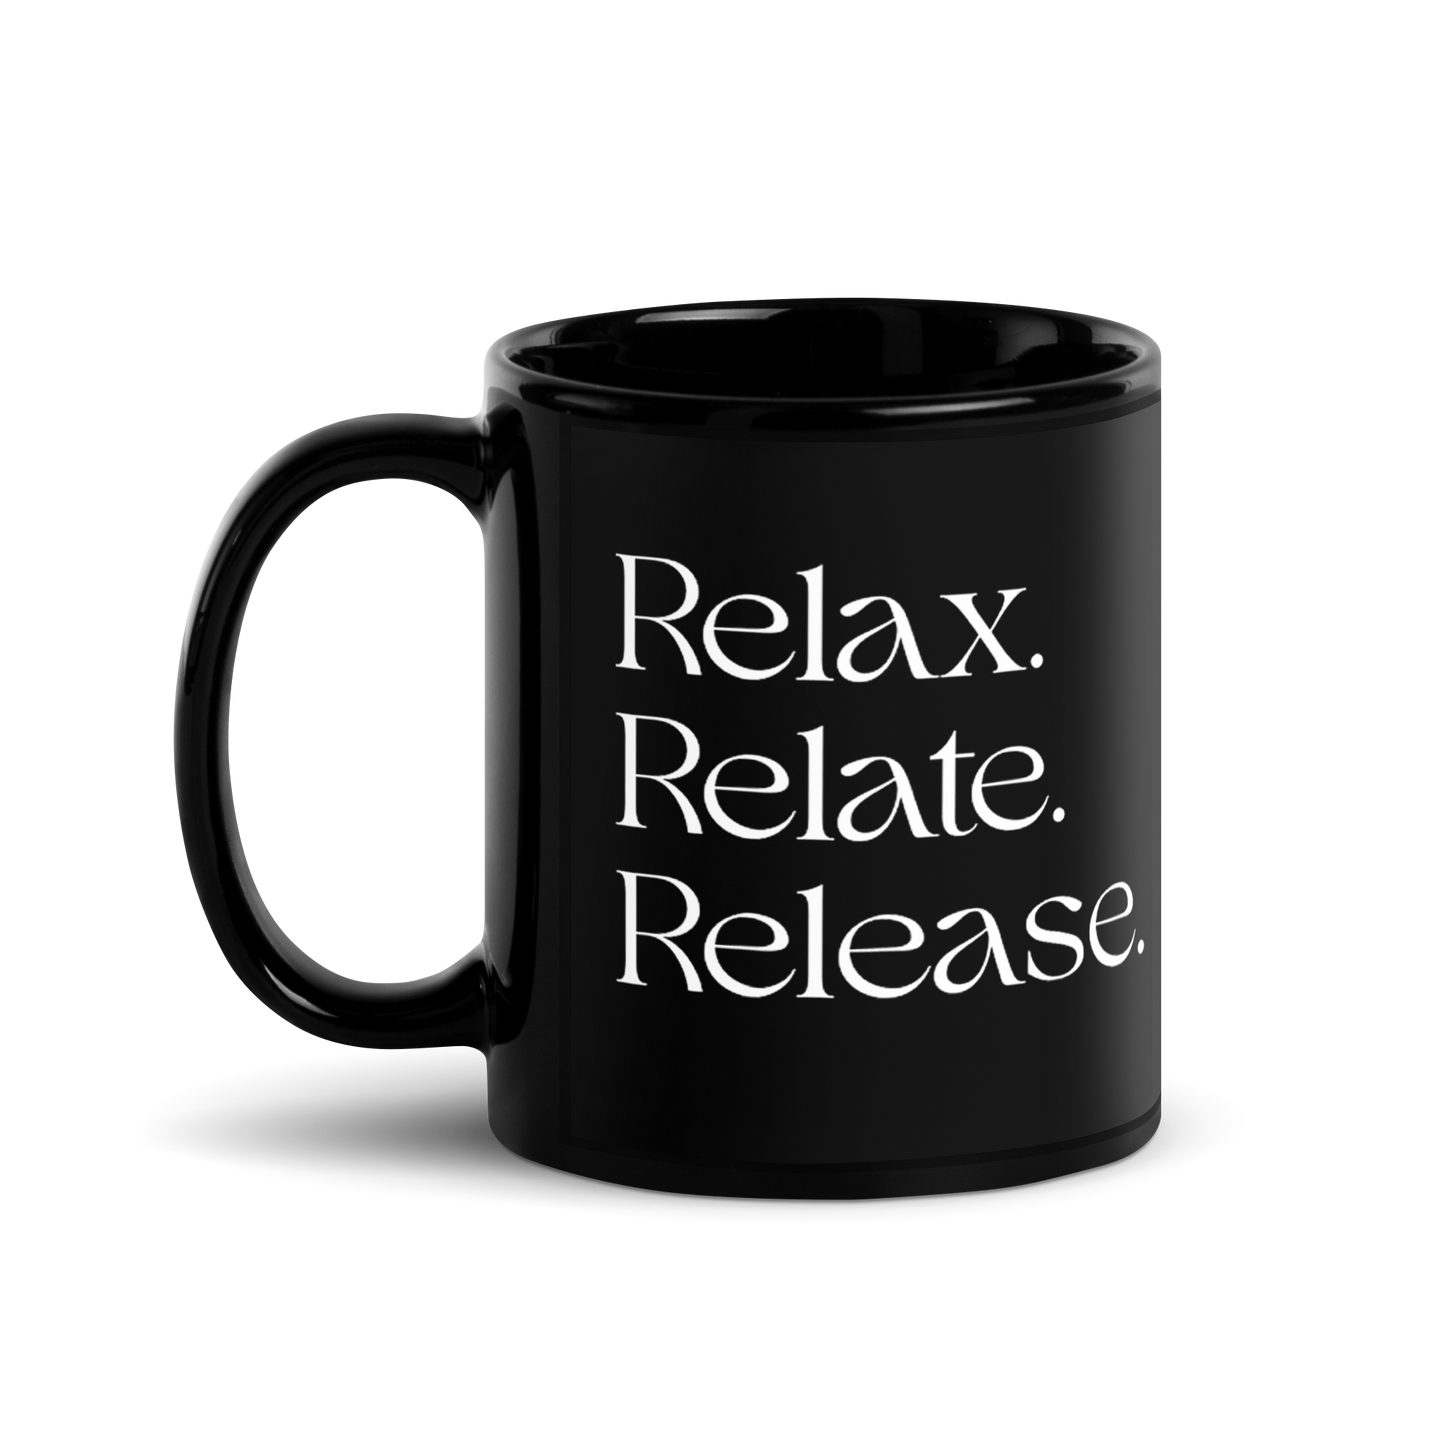 Relax. Relate. Release. Mug